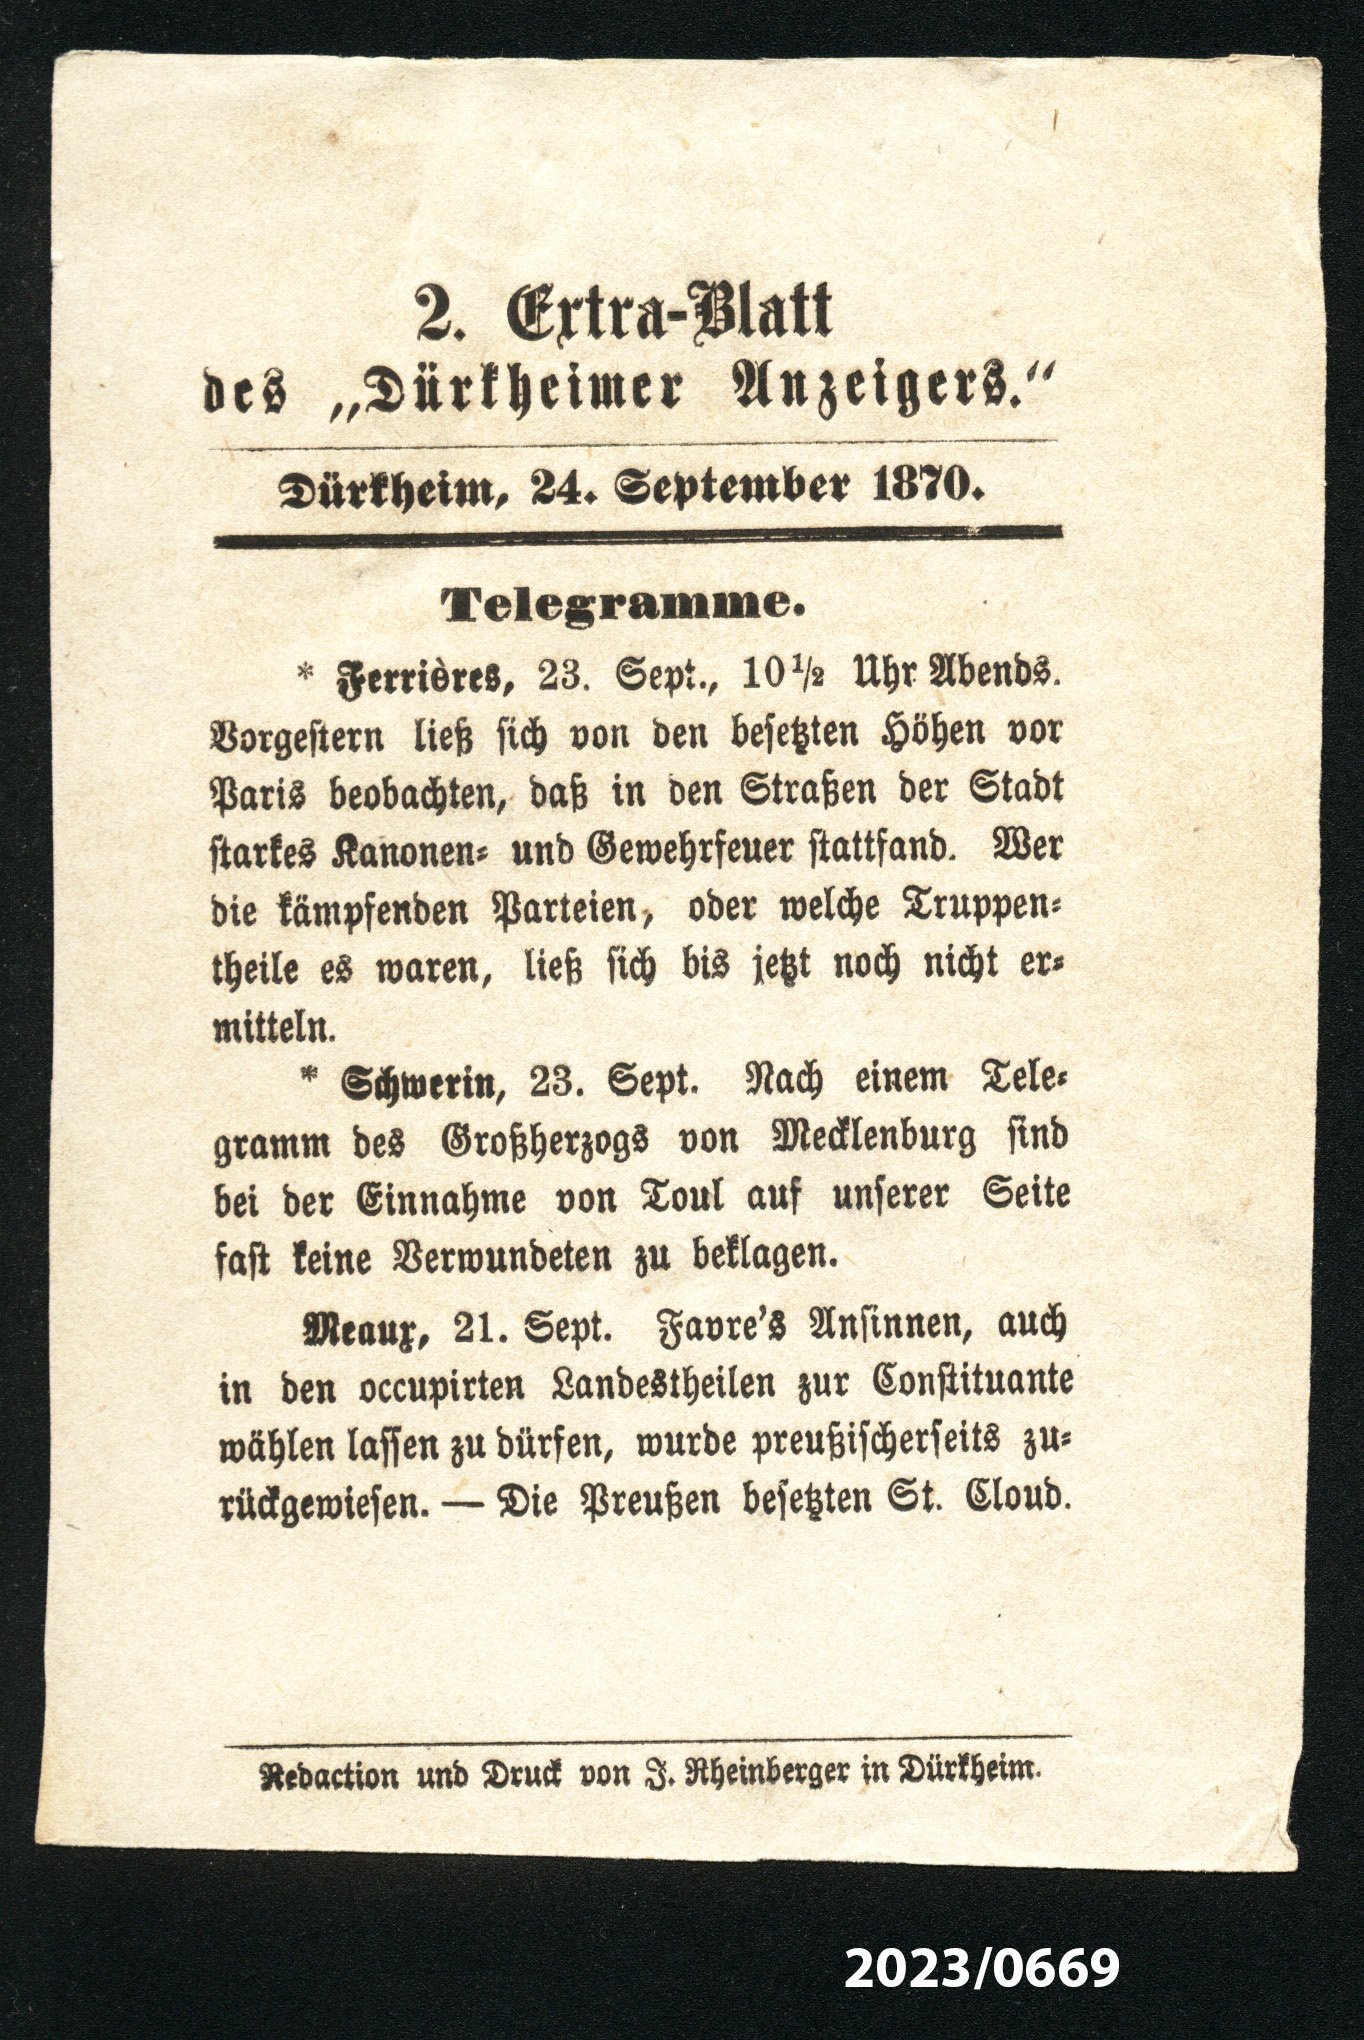 2. Extra-Blatt des "Dürkheimer Anzeigers." 24.9.1870 (Stadtmuseum Bad Dürkheim im Kulturzentrum Haus Catoir CC BY-NC-SA)